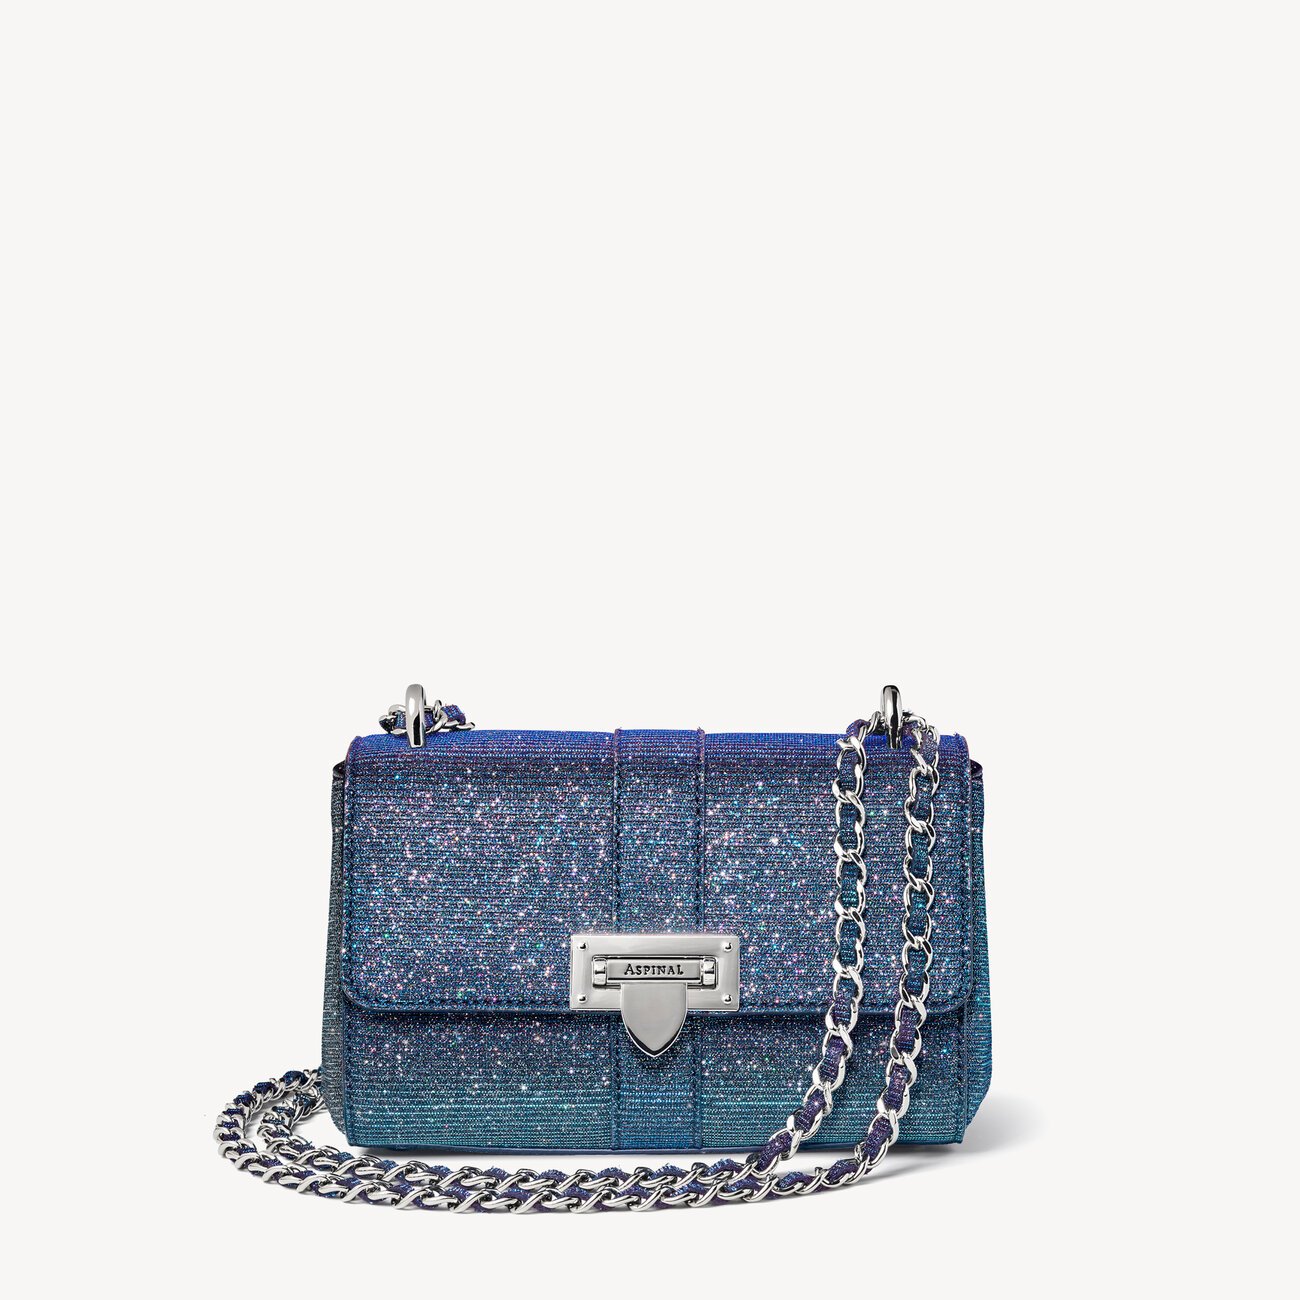 Aspinal of London Micro Lottie Bag in Blue Glitter.jpg